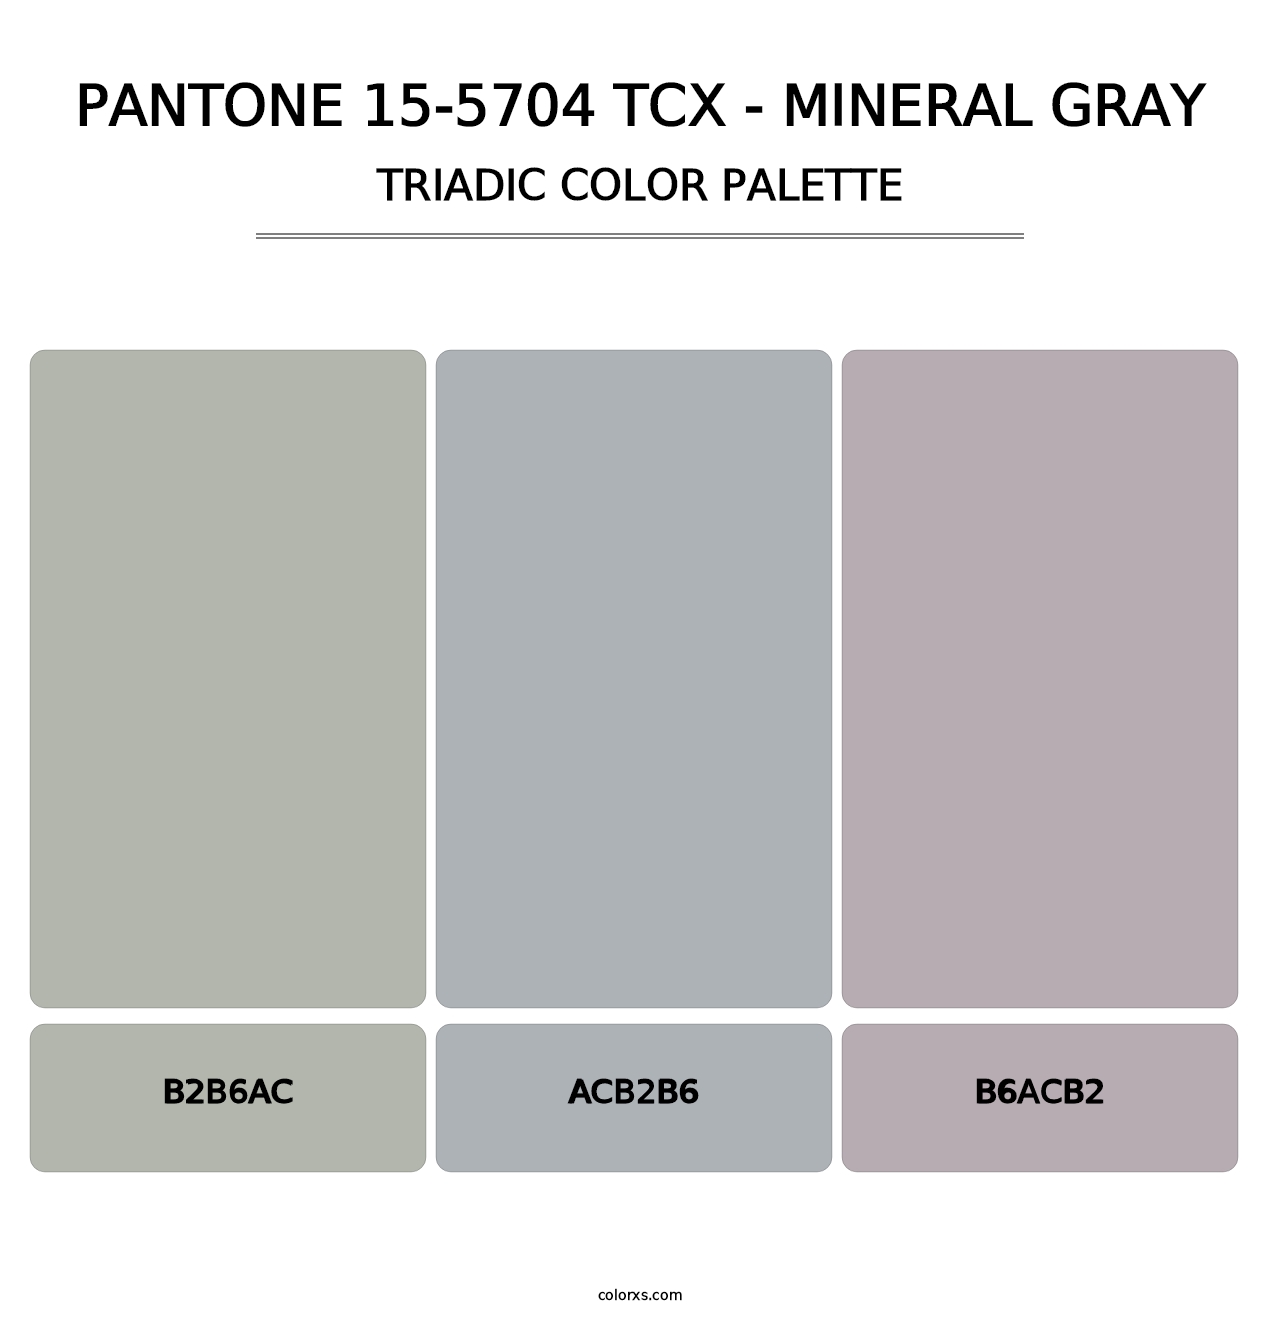 PANTONE 15-5704 TCX - Mineral Gray - Triadic Color Palette